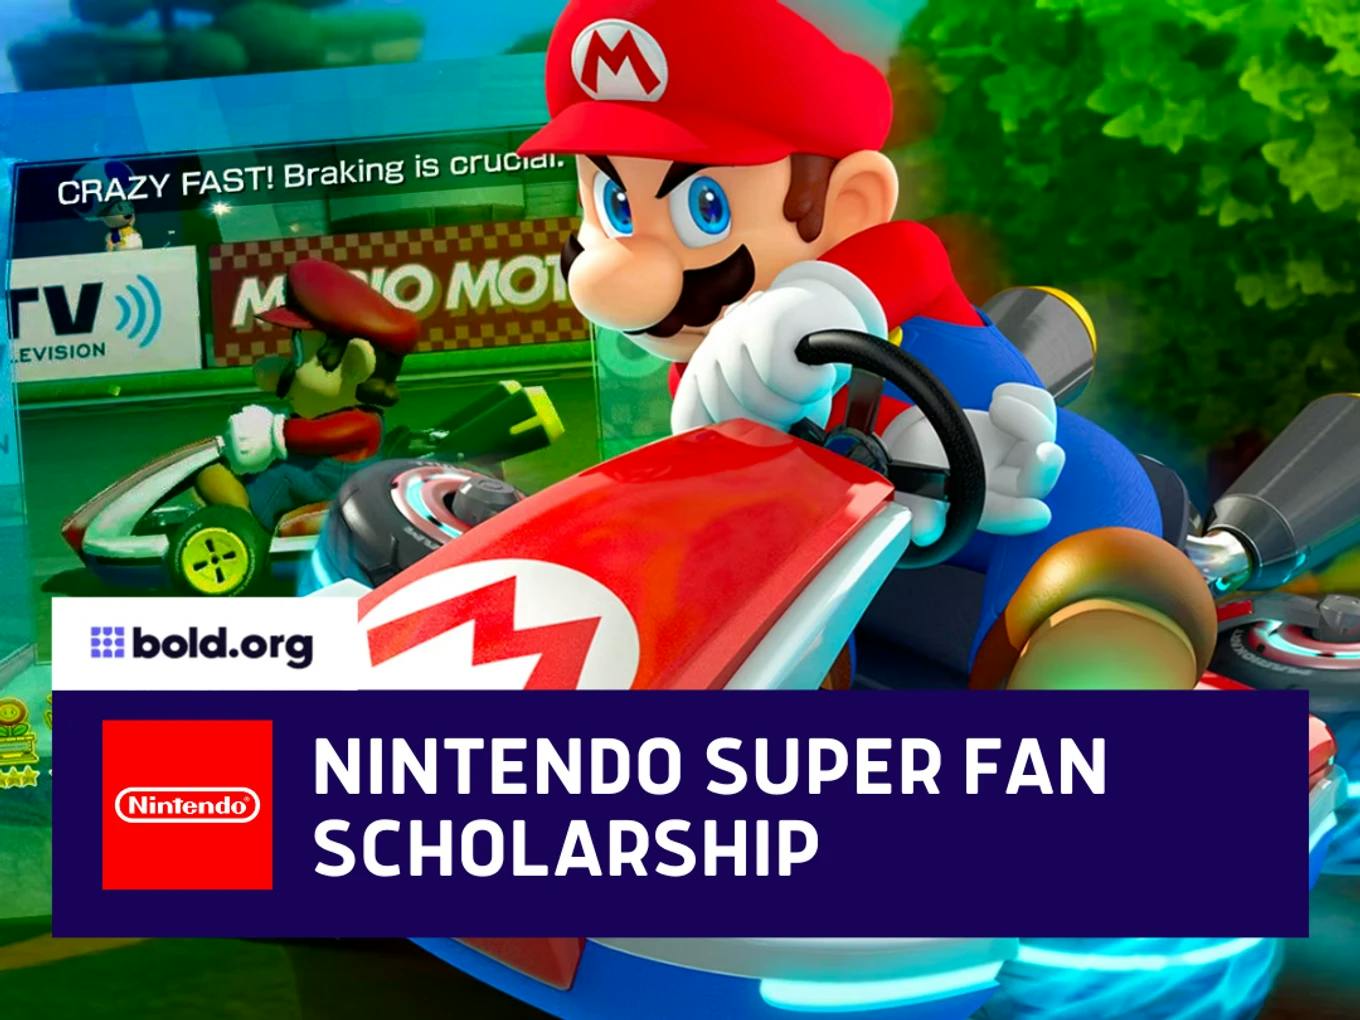 Nintendo Super Fan Scholarship